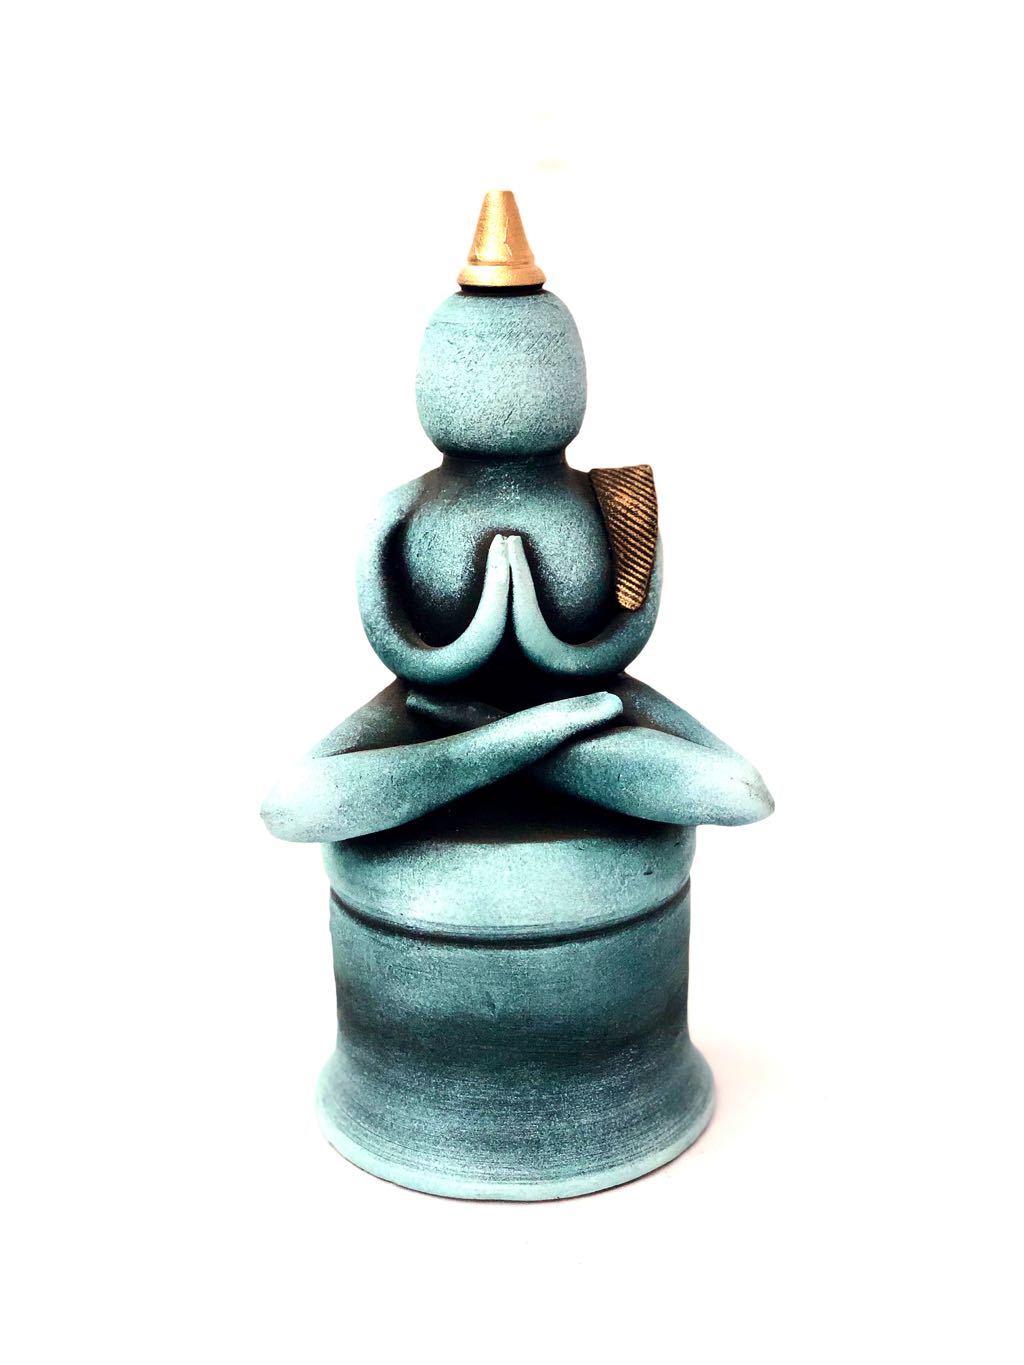 Abstract Buddha Sitting On Platform Meditation Pottery From Tamrapatra - Tamrapatra